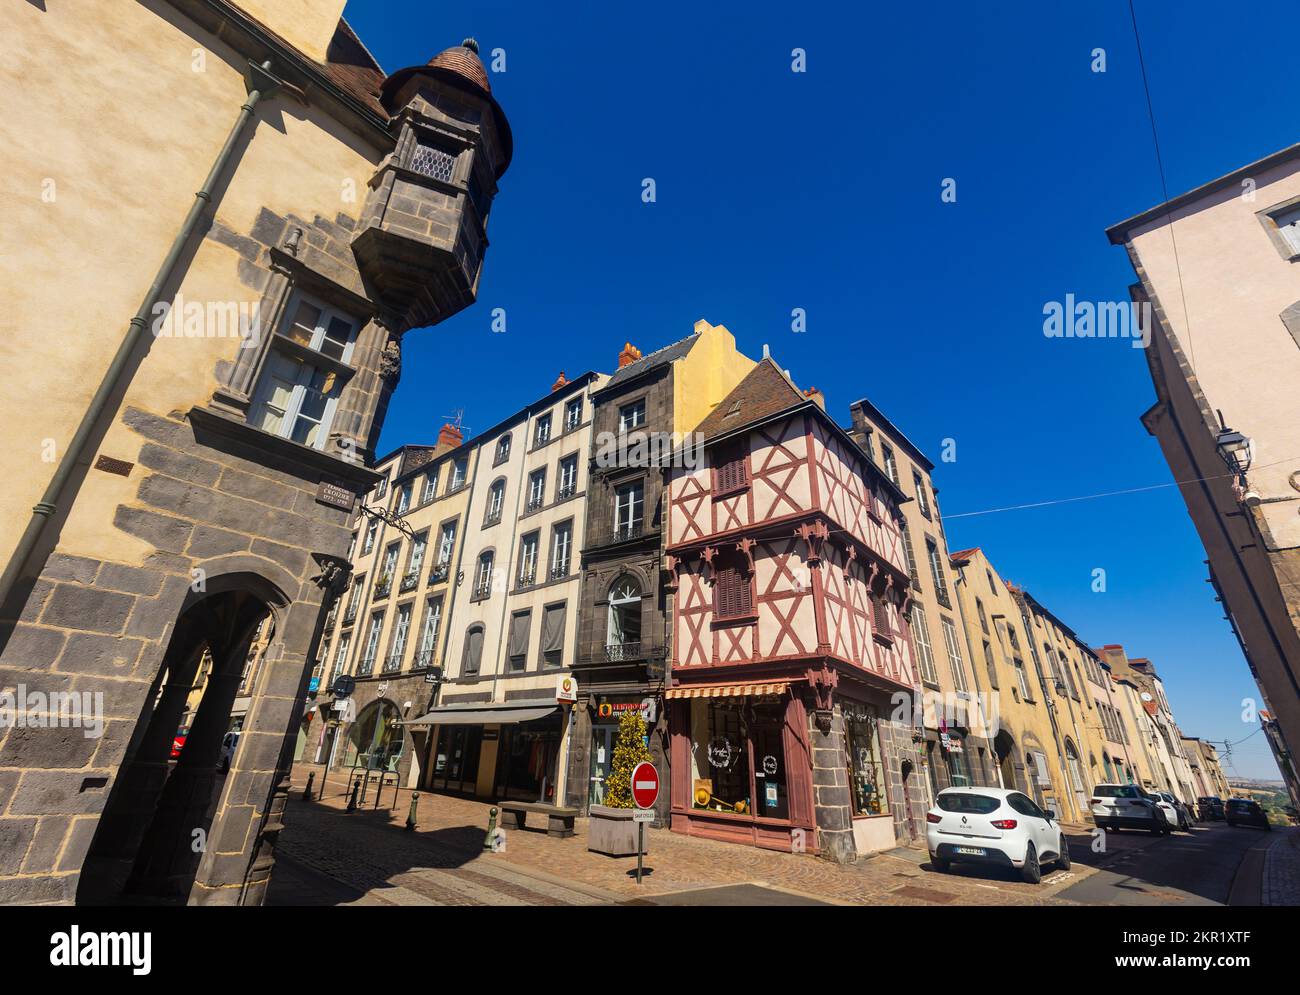 Façades typiques construites avec des pierres volcaniques dans la rue de la tour de l'horloge de Riom, France Banque D'Images